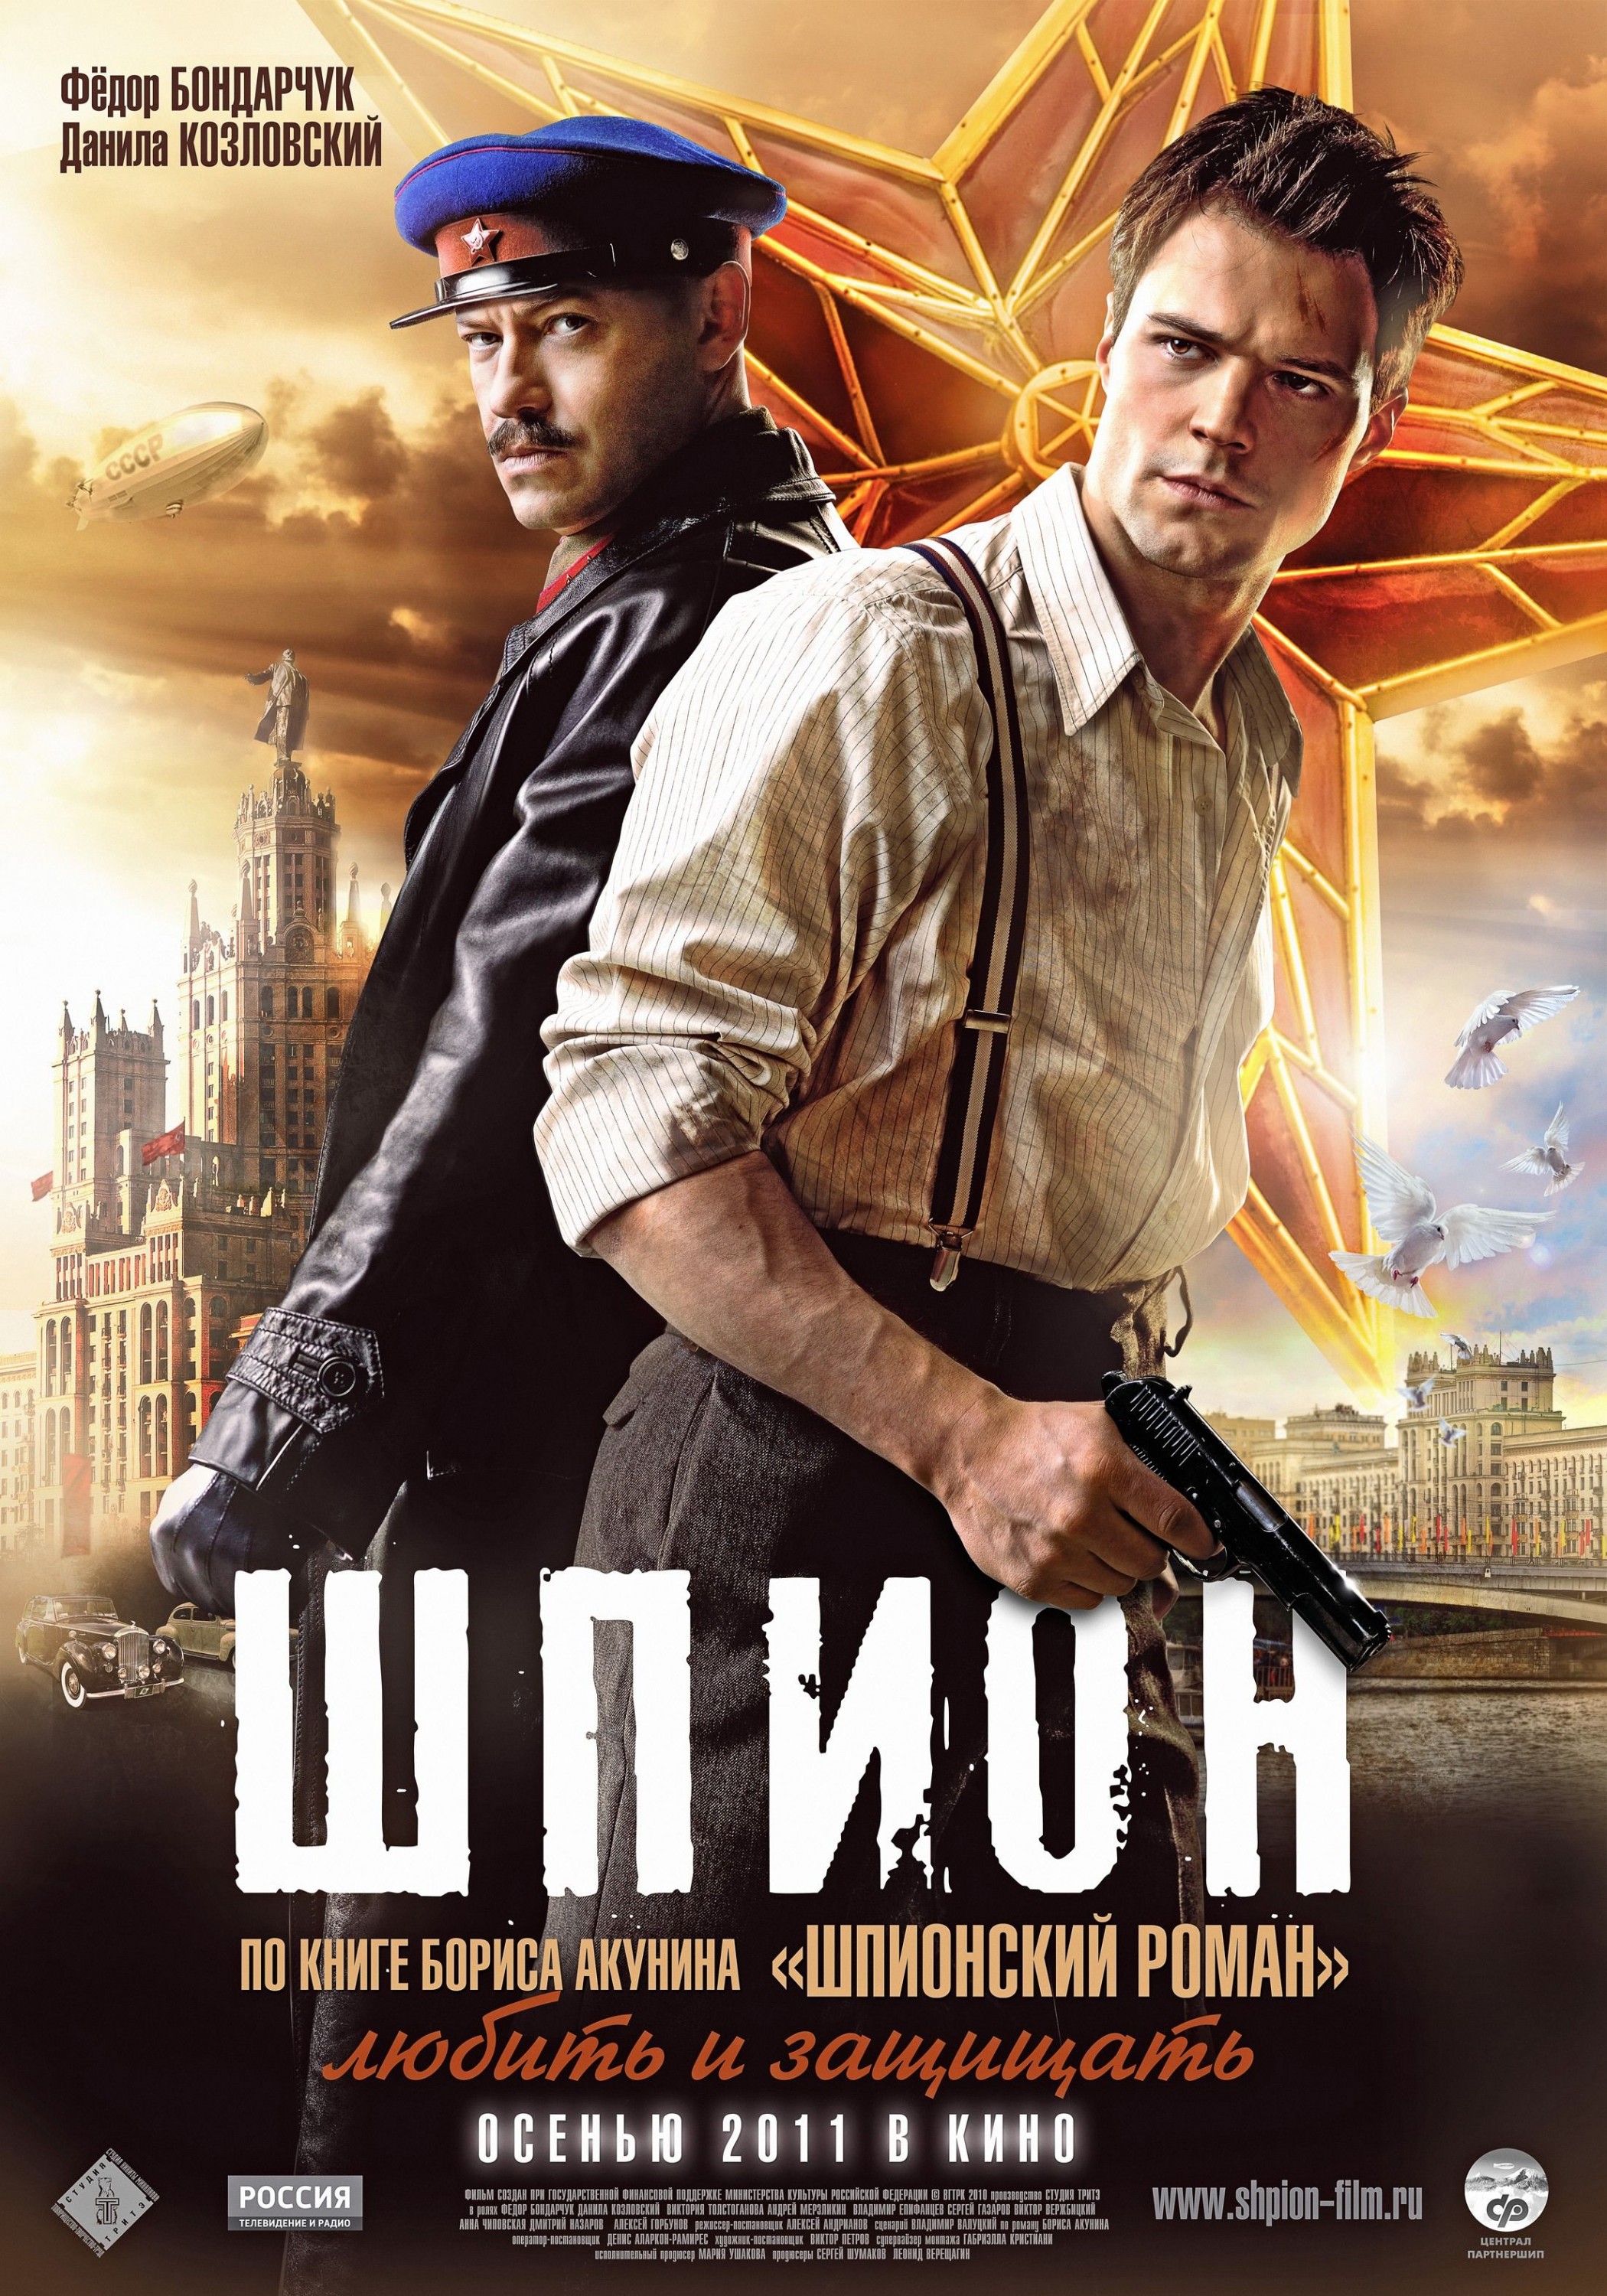 Mega Sized Movie Poster Image for Shpion 